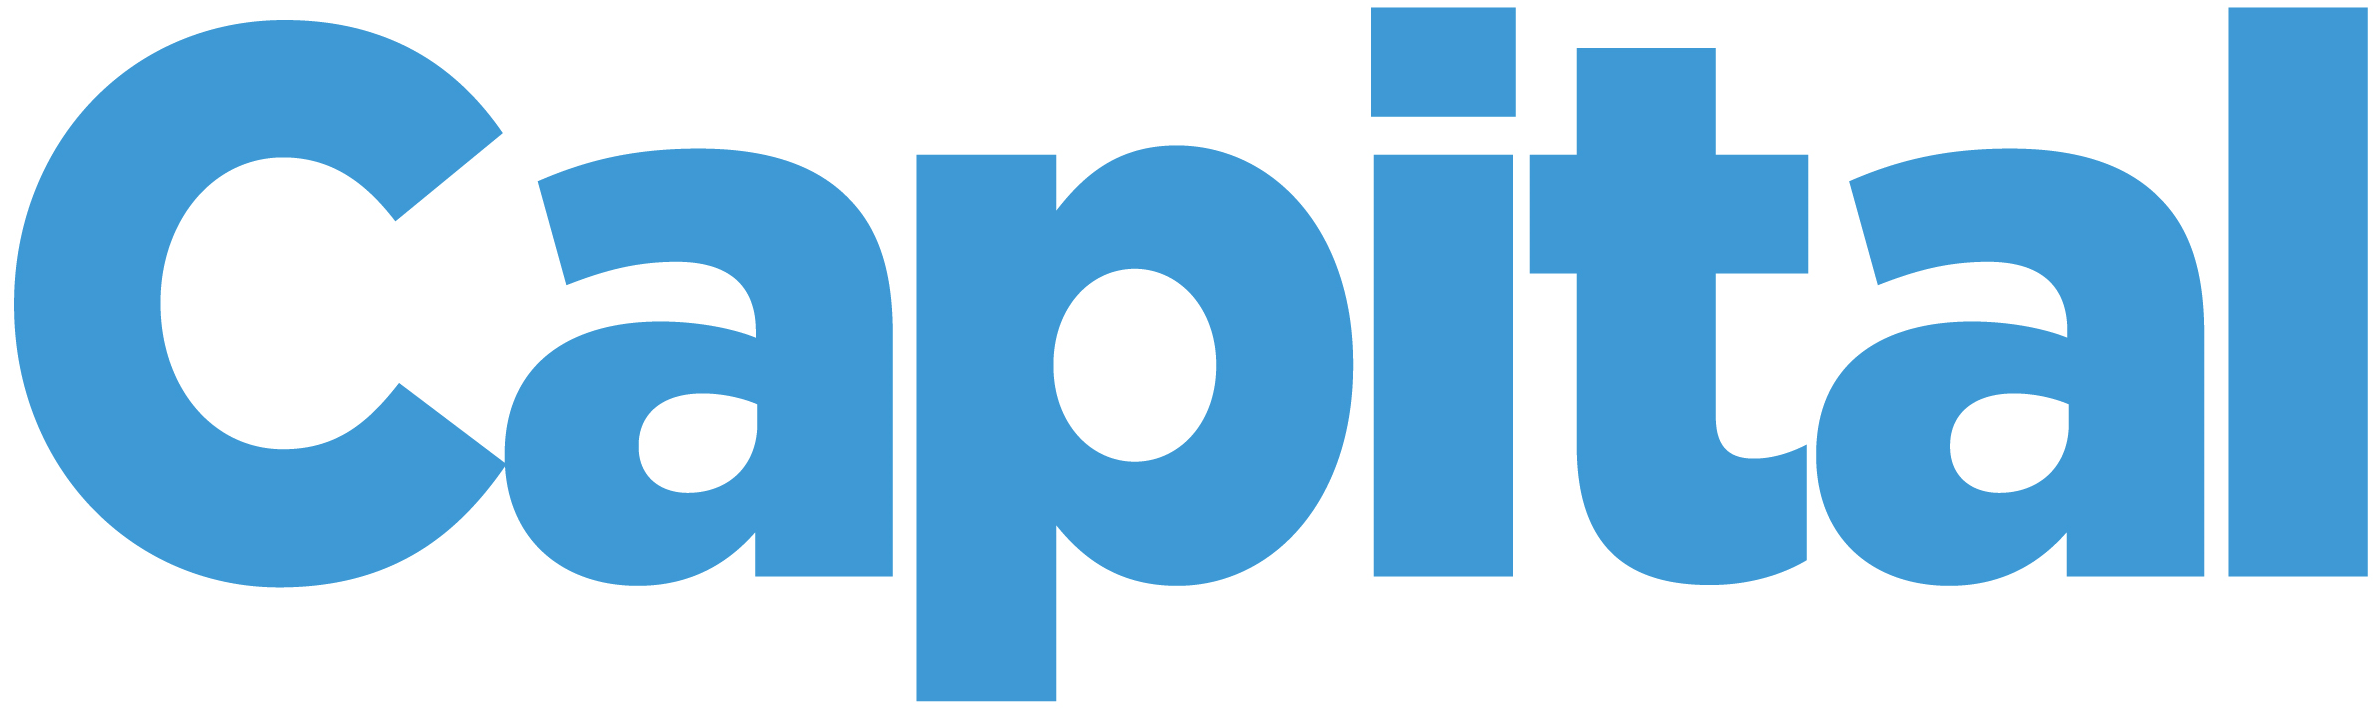 Capital - logo 1